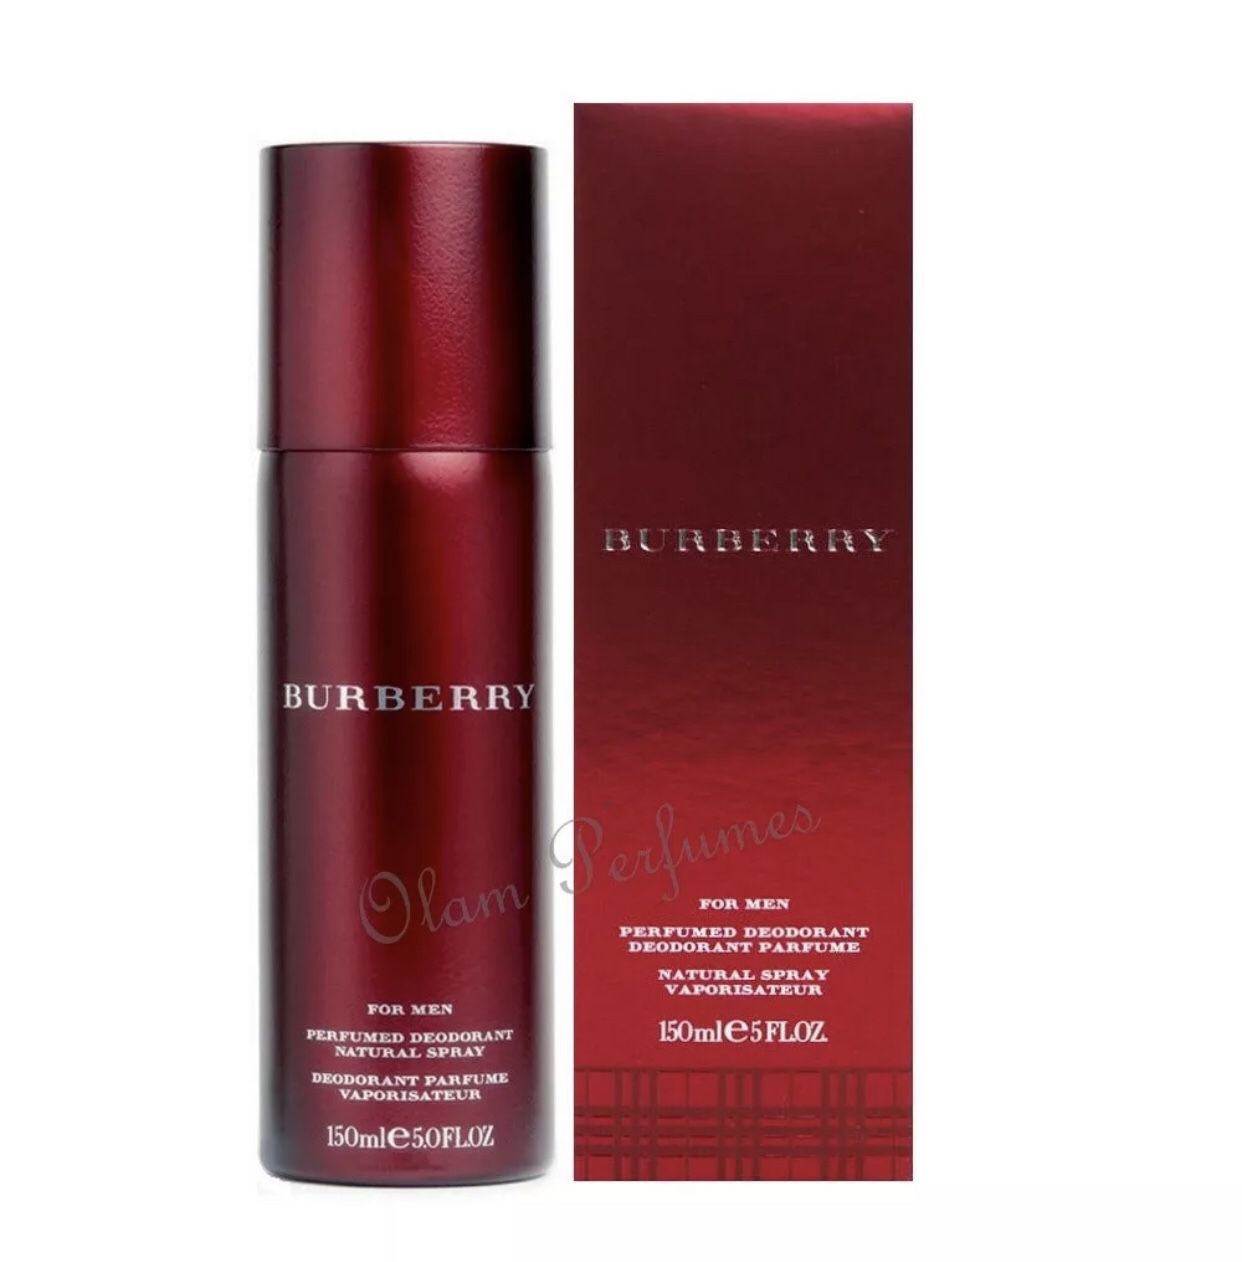 Burberry Classic for Men Deodorant Fragrance Spray, 150ml / 5oz